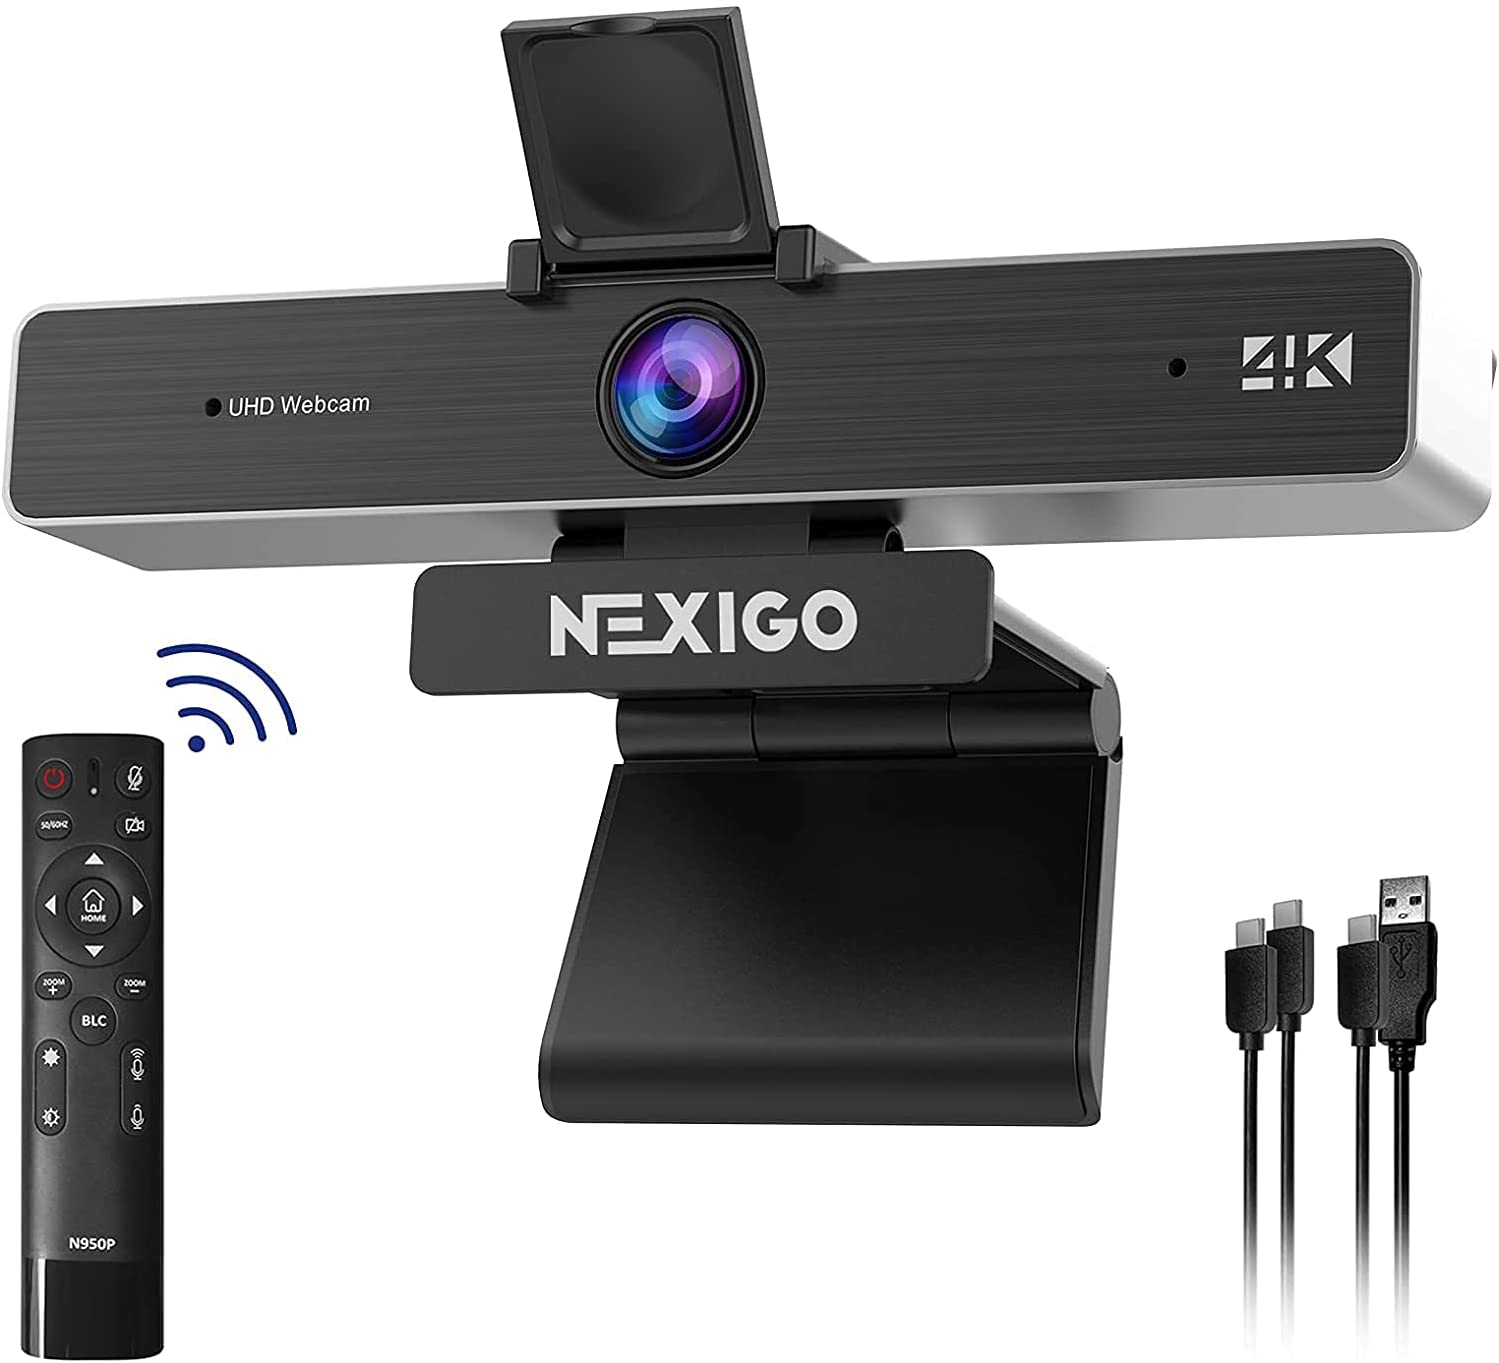 Zoom Certified, NexiGo N950P 4K Zoomable Webcam for home office